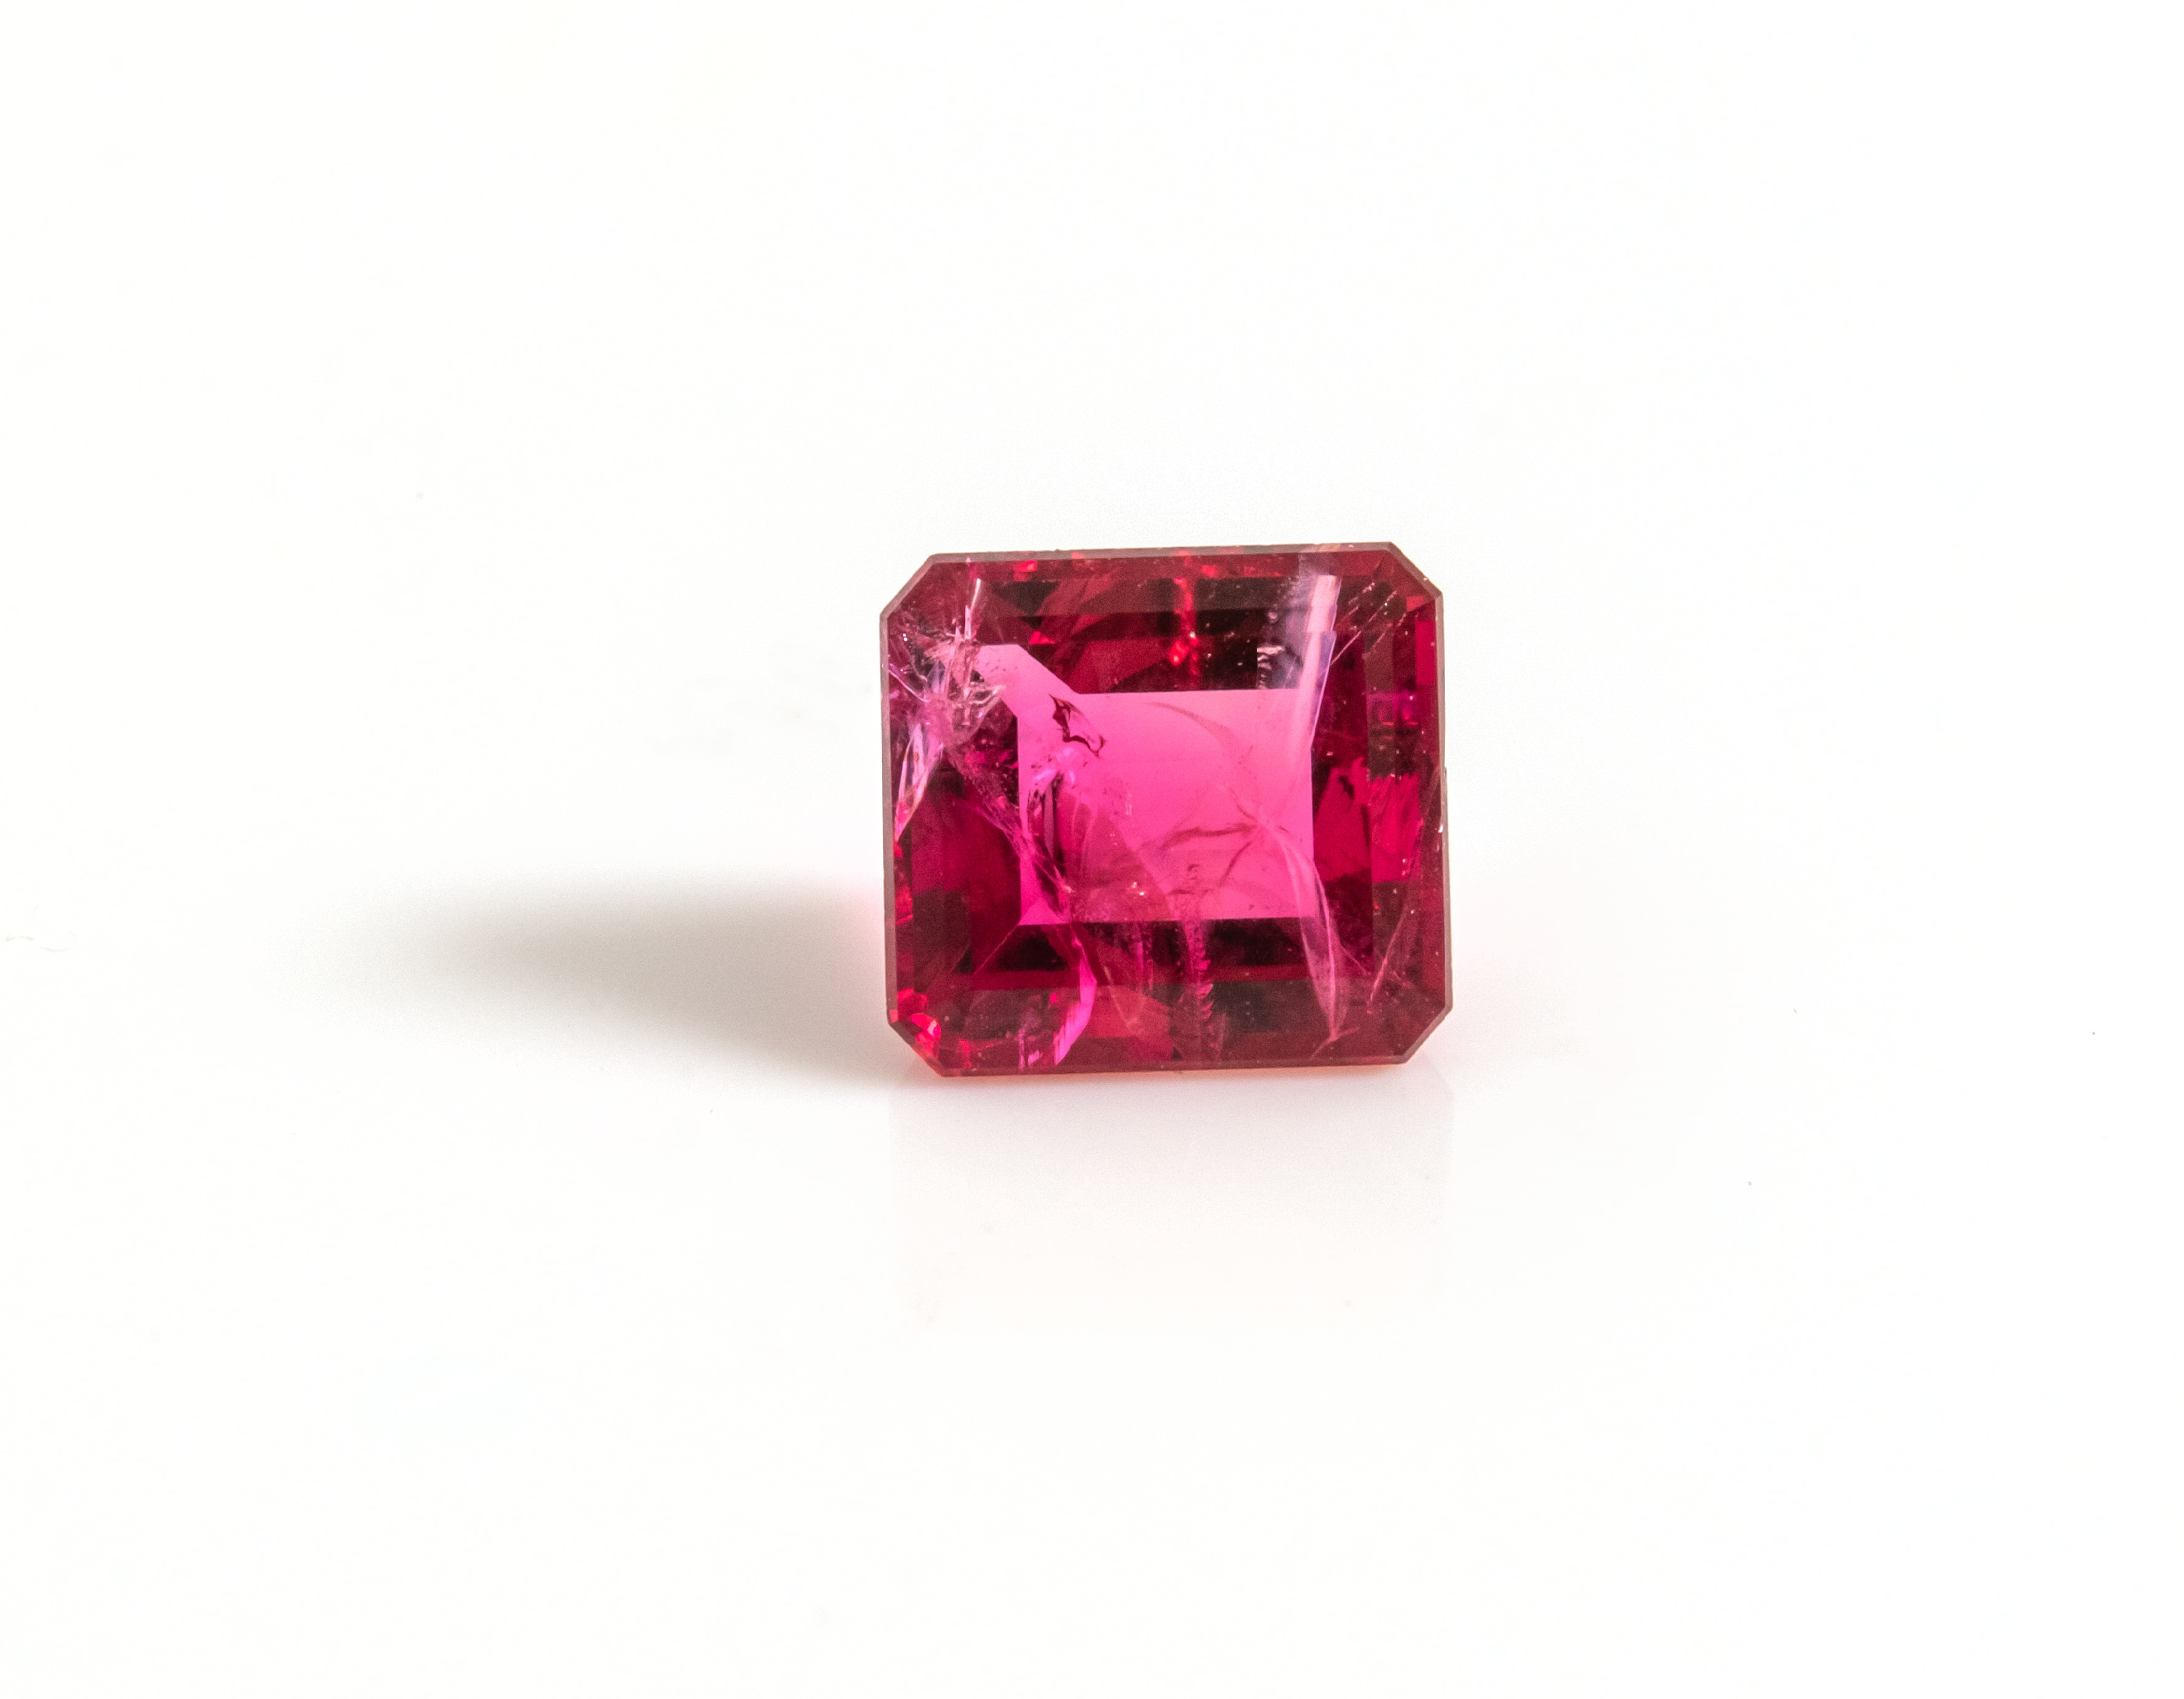 American Gemstones: Red Beryl from Utah - - faceted red beryl image credit jtv min crop